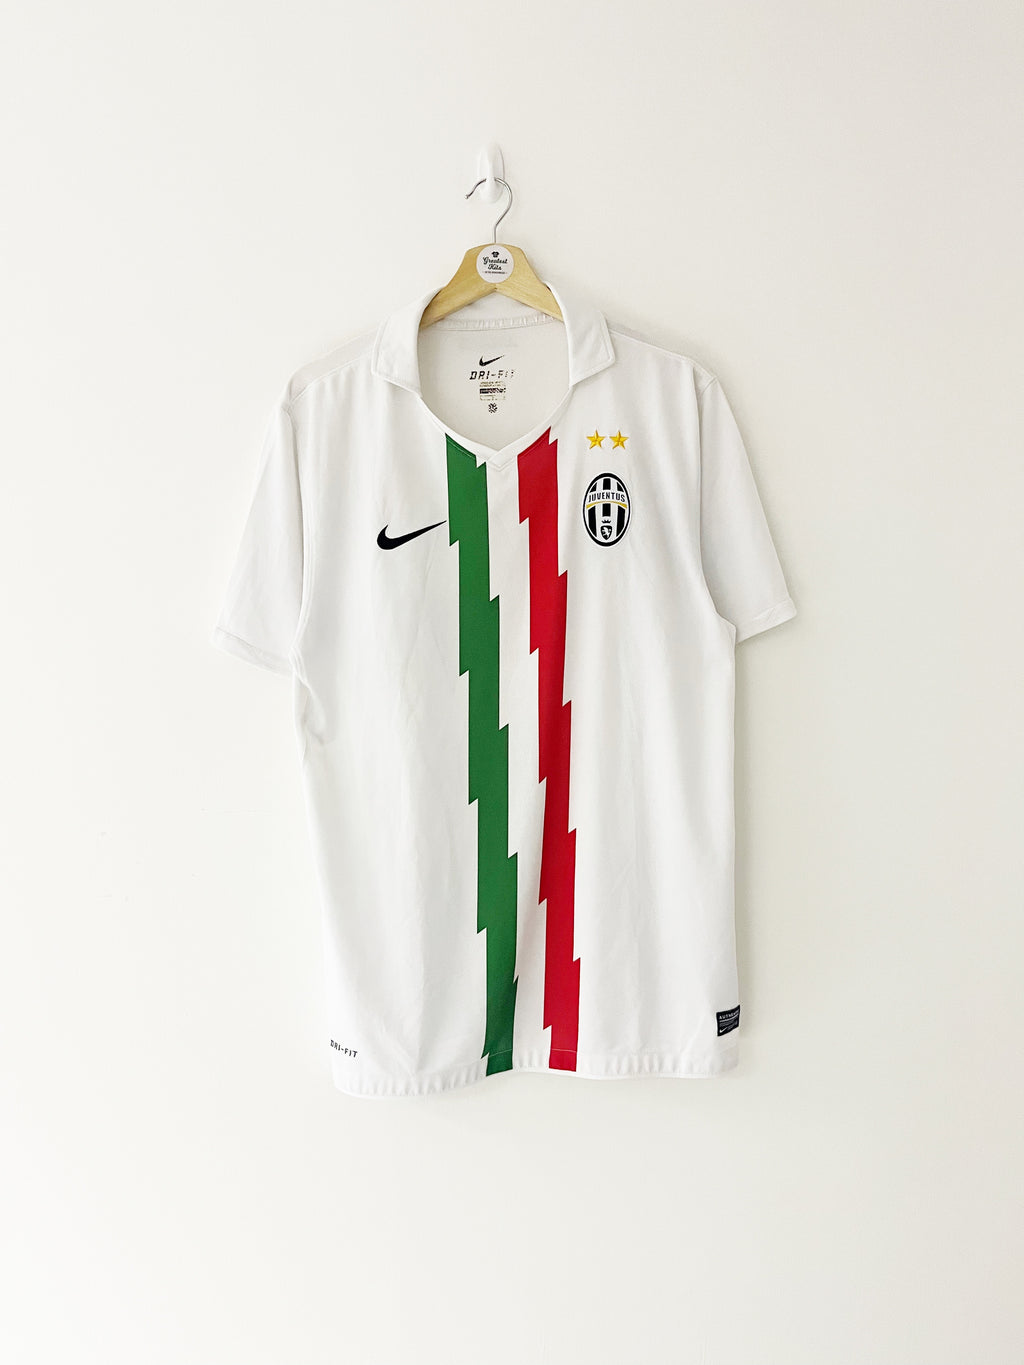 2010/12 Juventus Away Shirt (L) 9/10